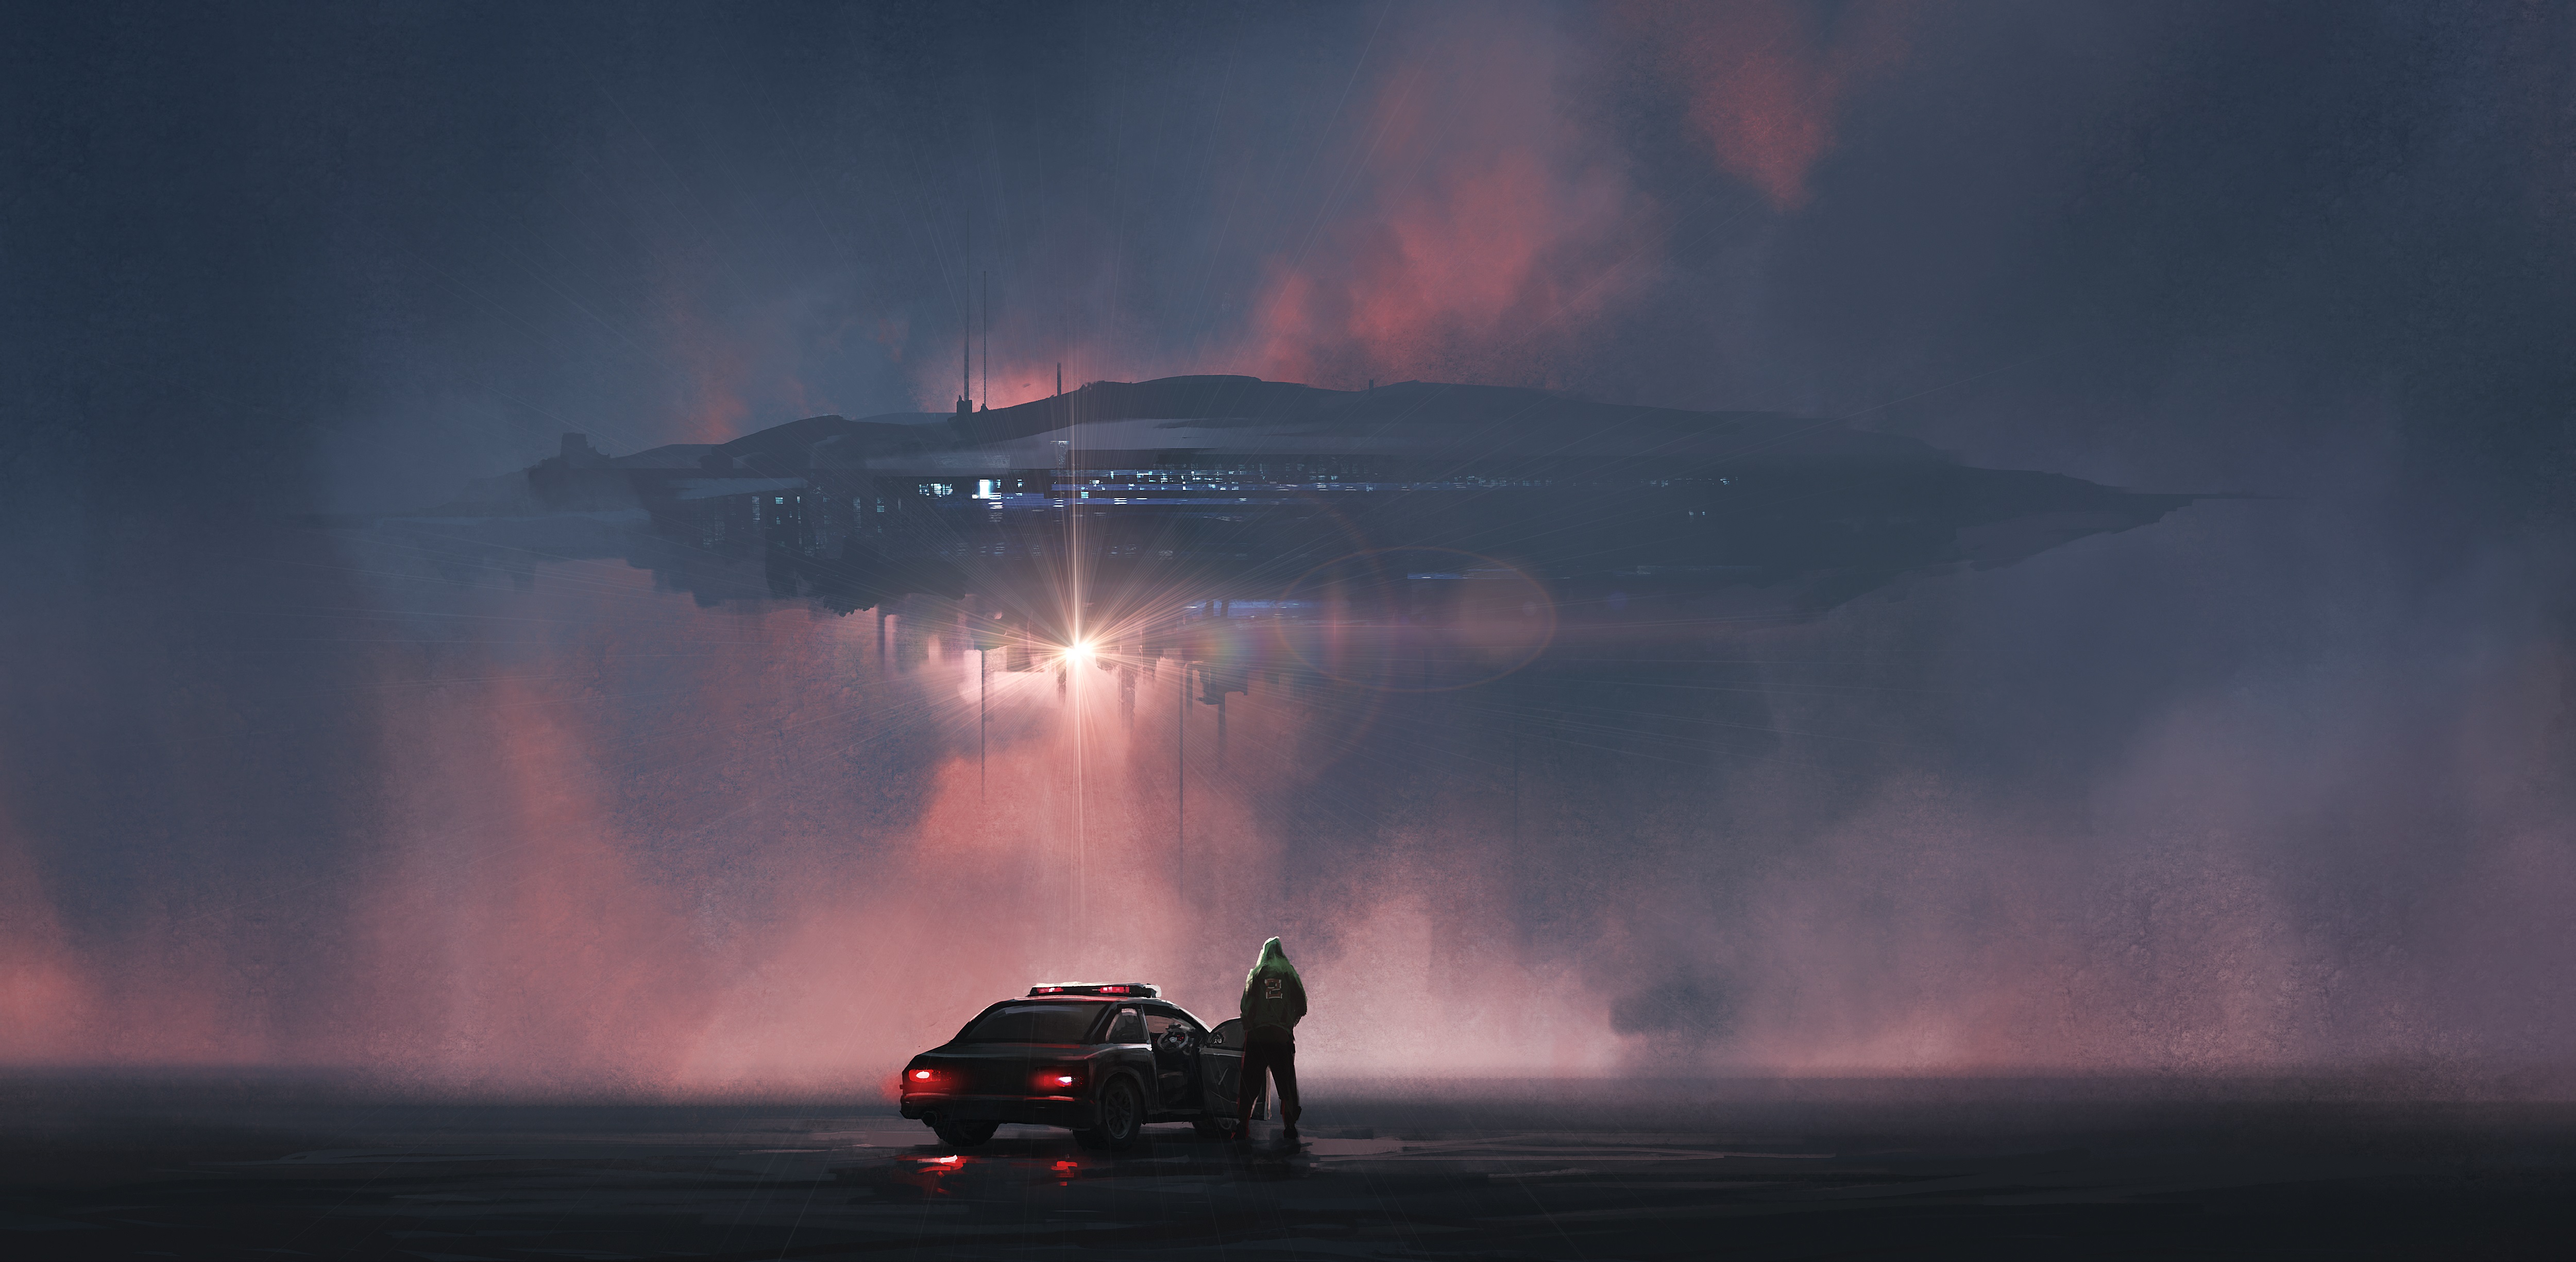 General 5000x2450 science fiction spaceship digital art artwork futuristic car men police cars lights mist clouds